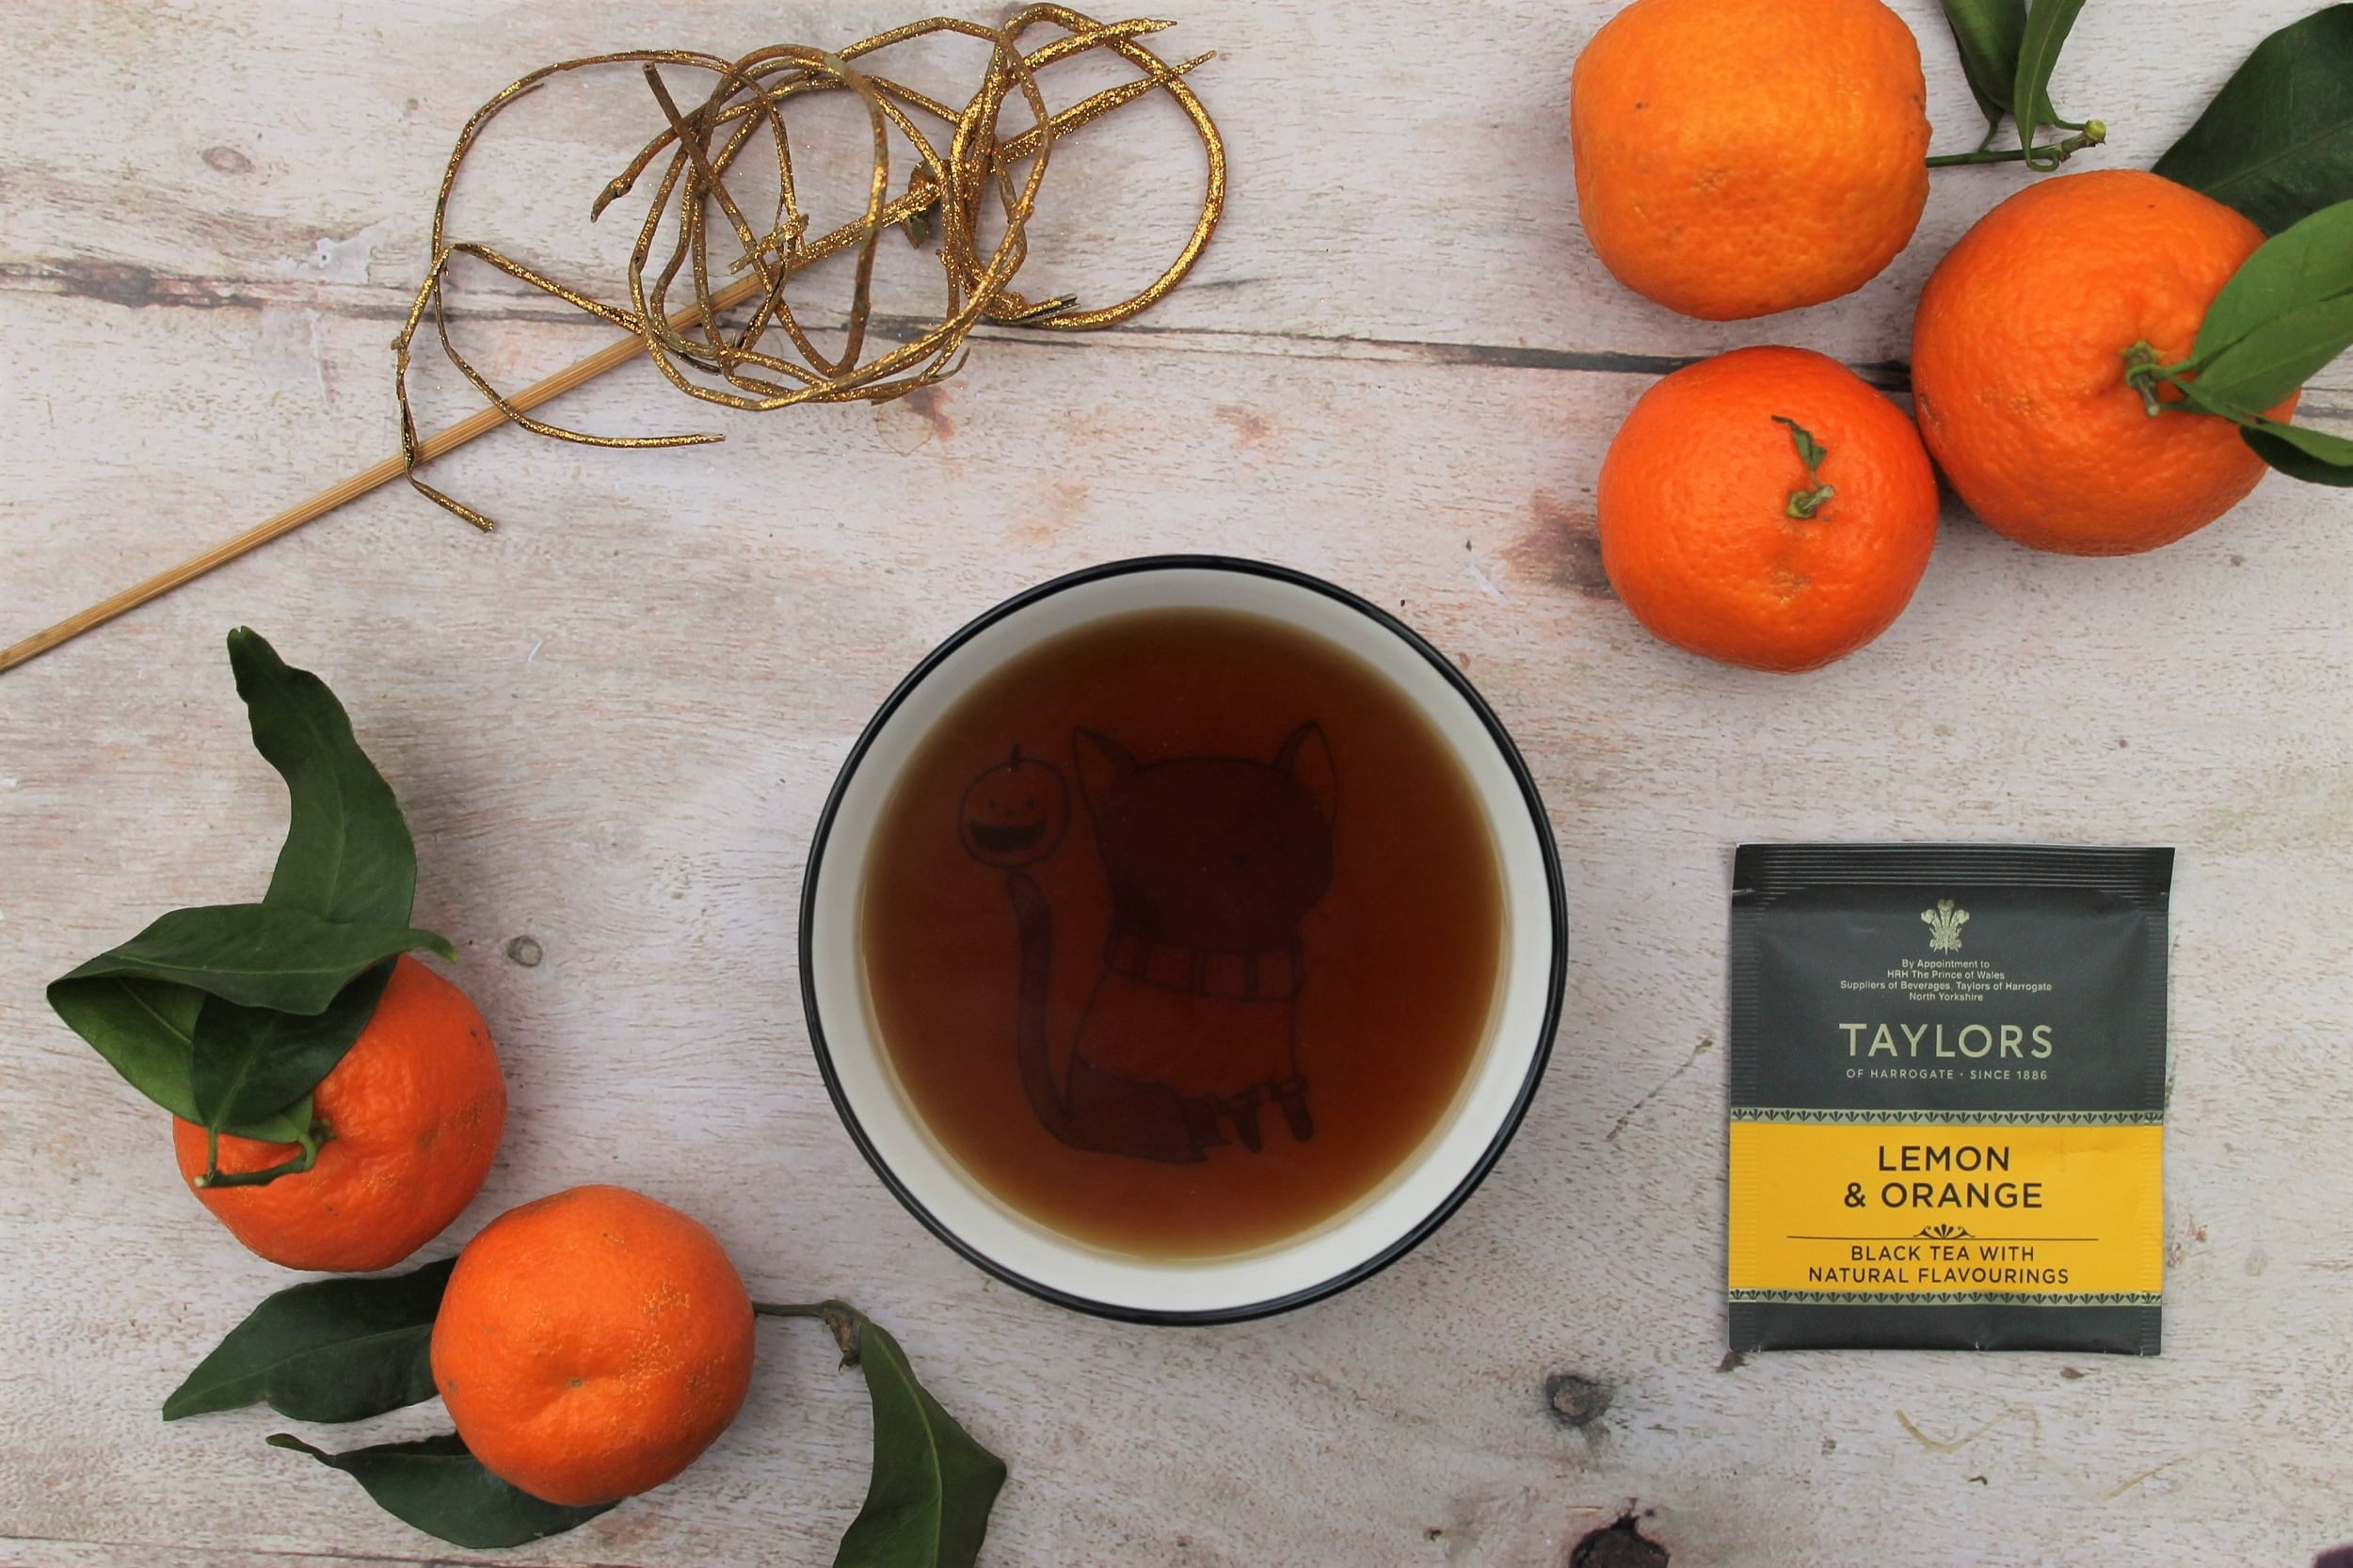 Taylors of Harrogate Lemon & Orange Tea Review